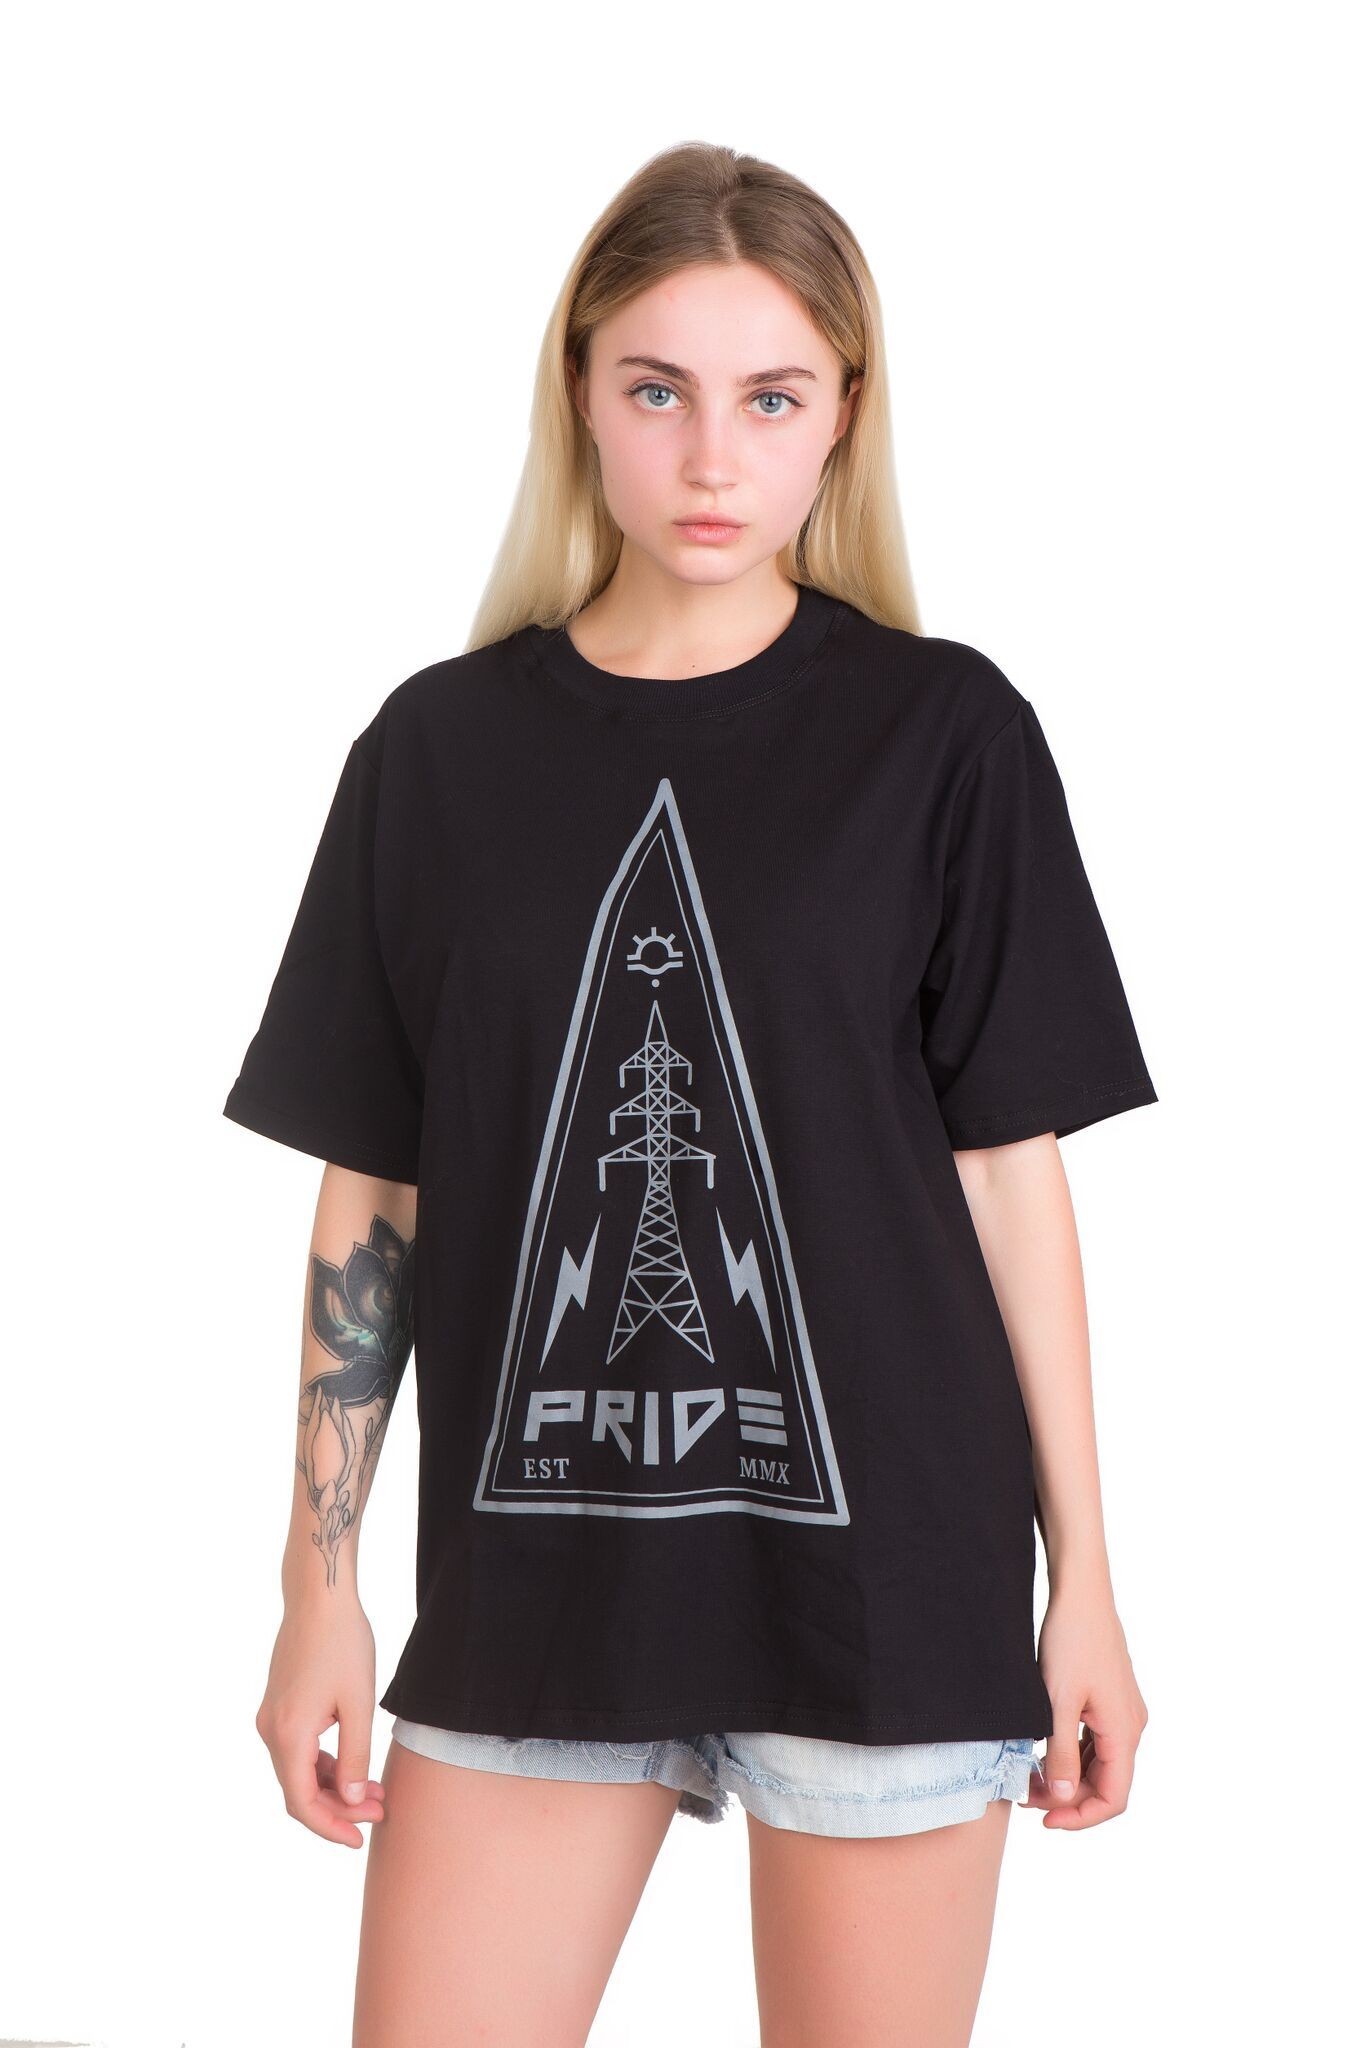 T-shirt Pride High voltage black, XS size Photo